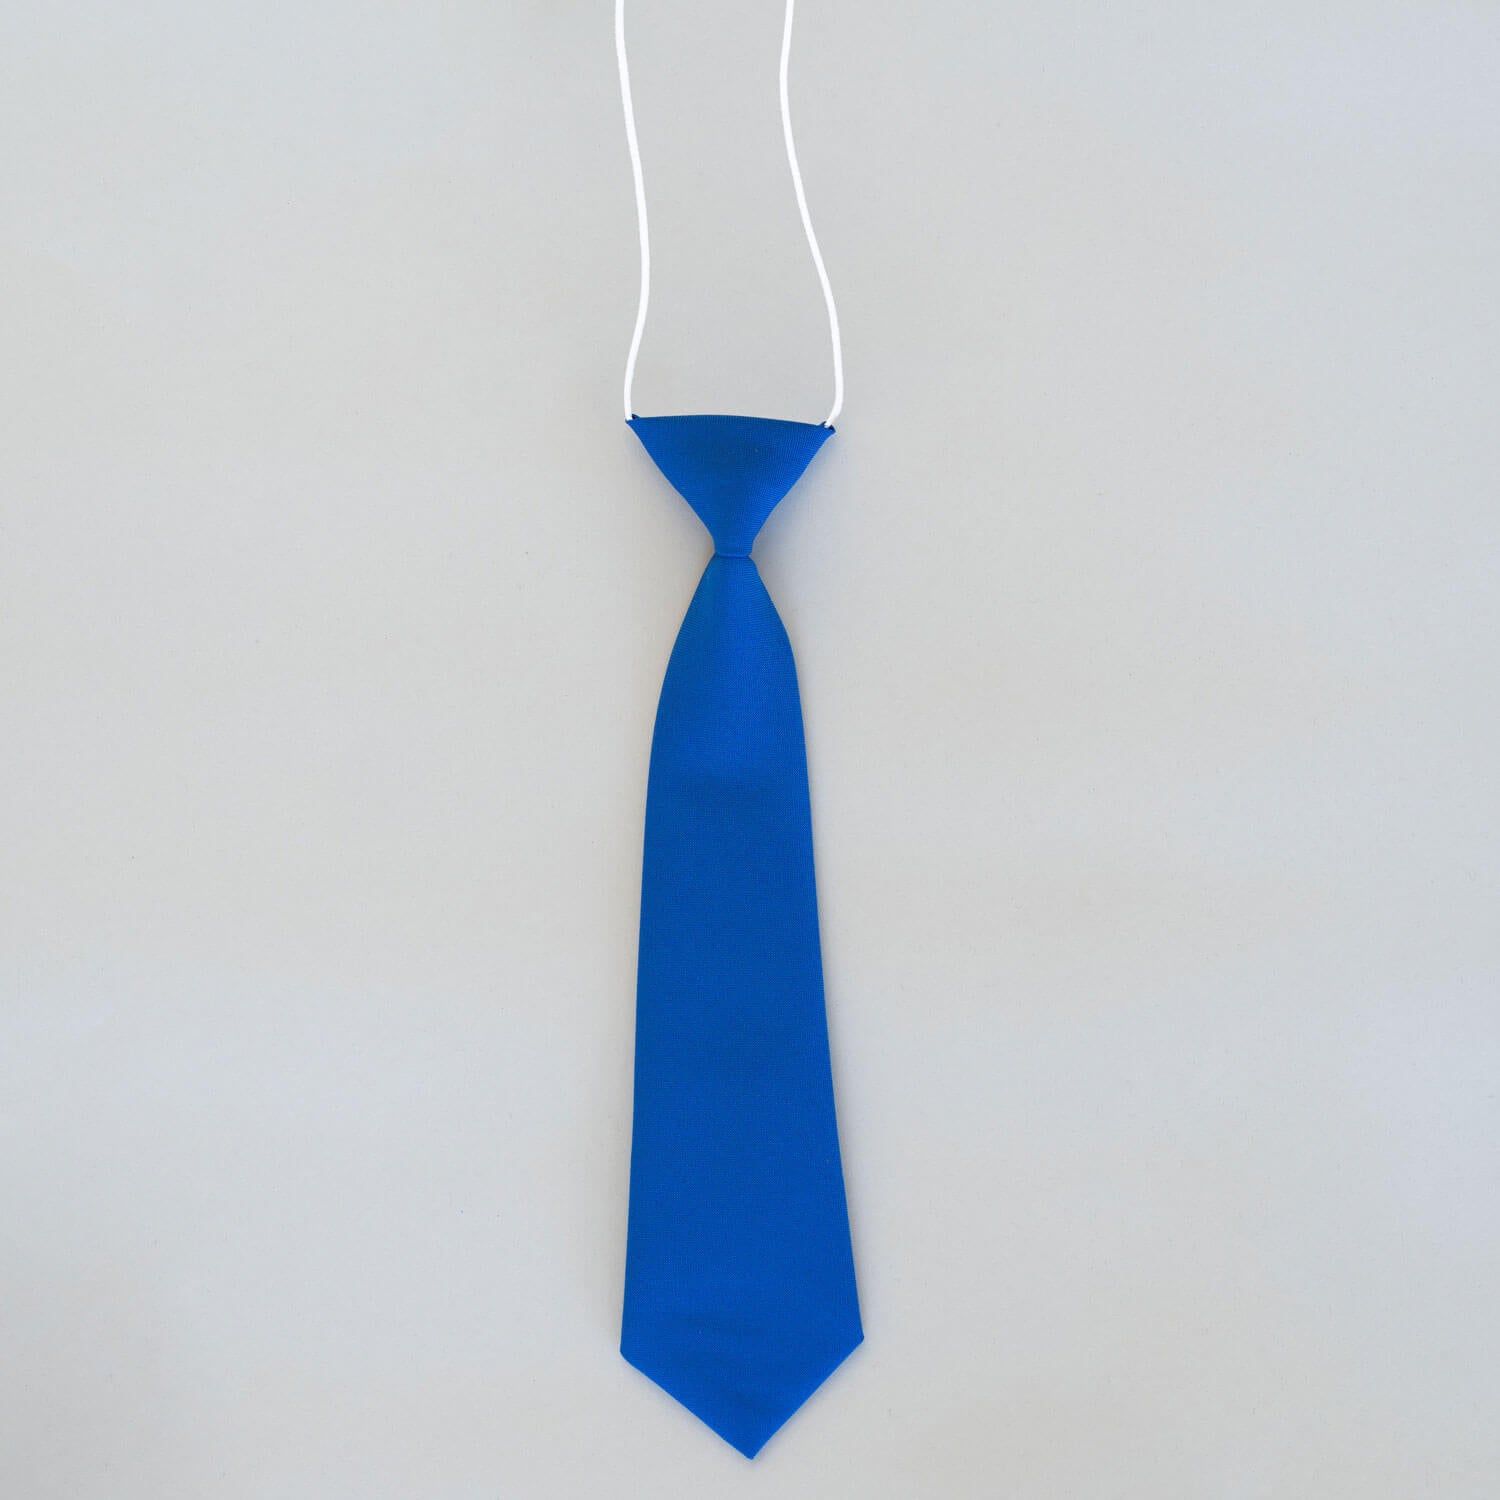 W Mcbrinn Elasticated School Tie - Blue 1 Shaws Department Stores